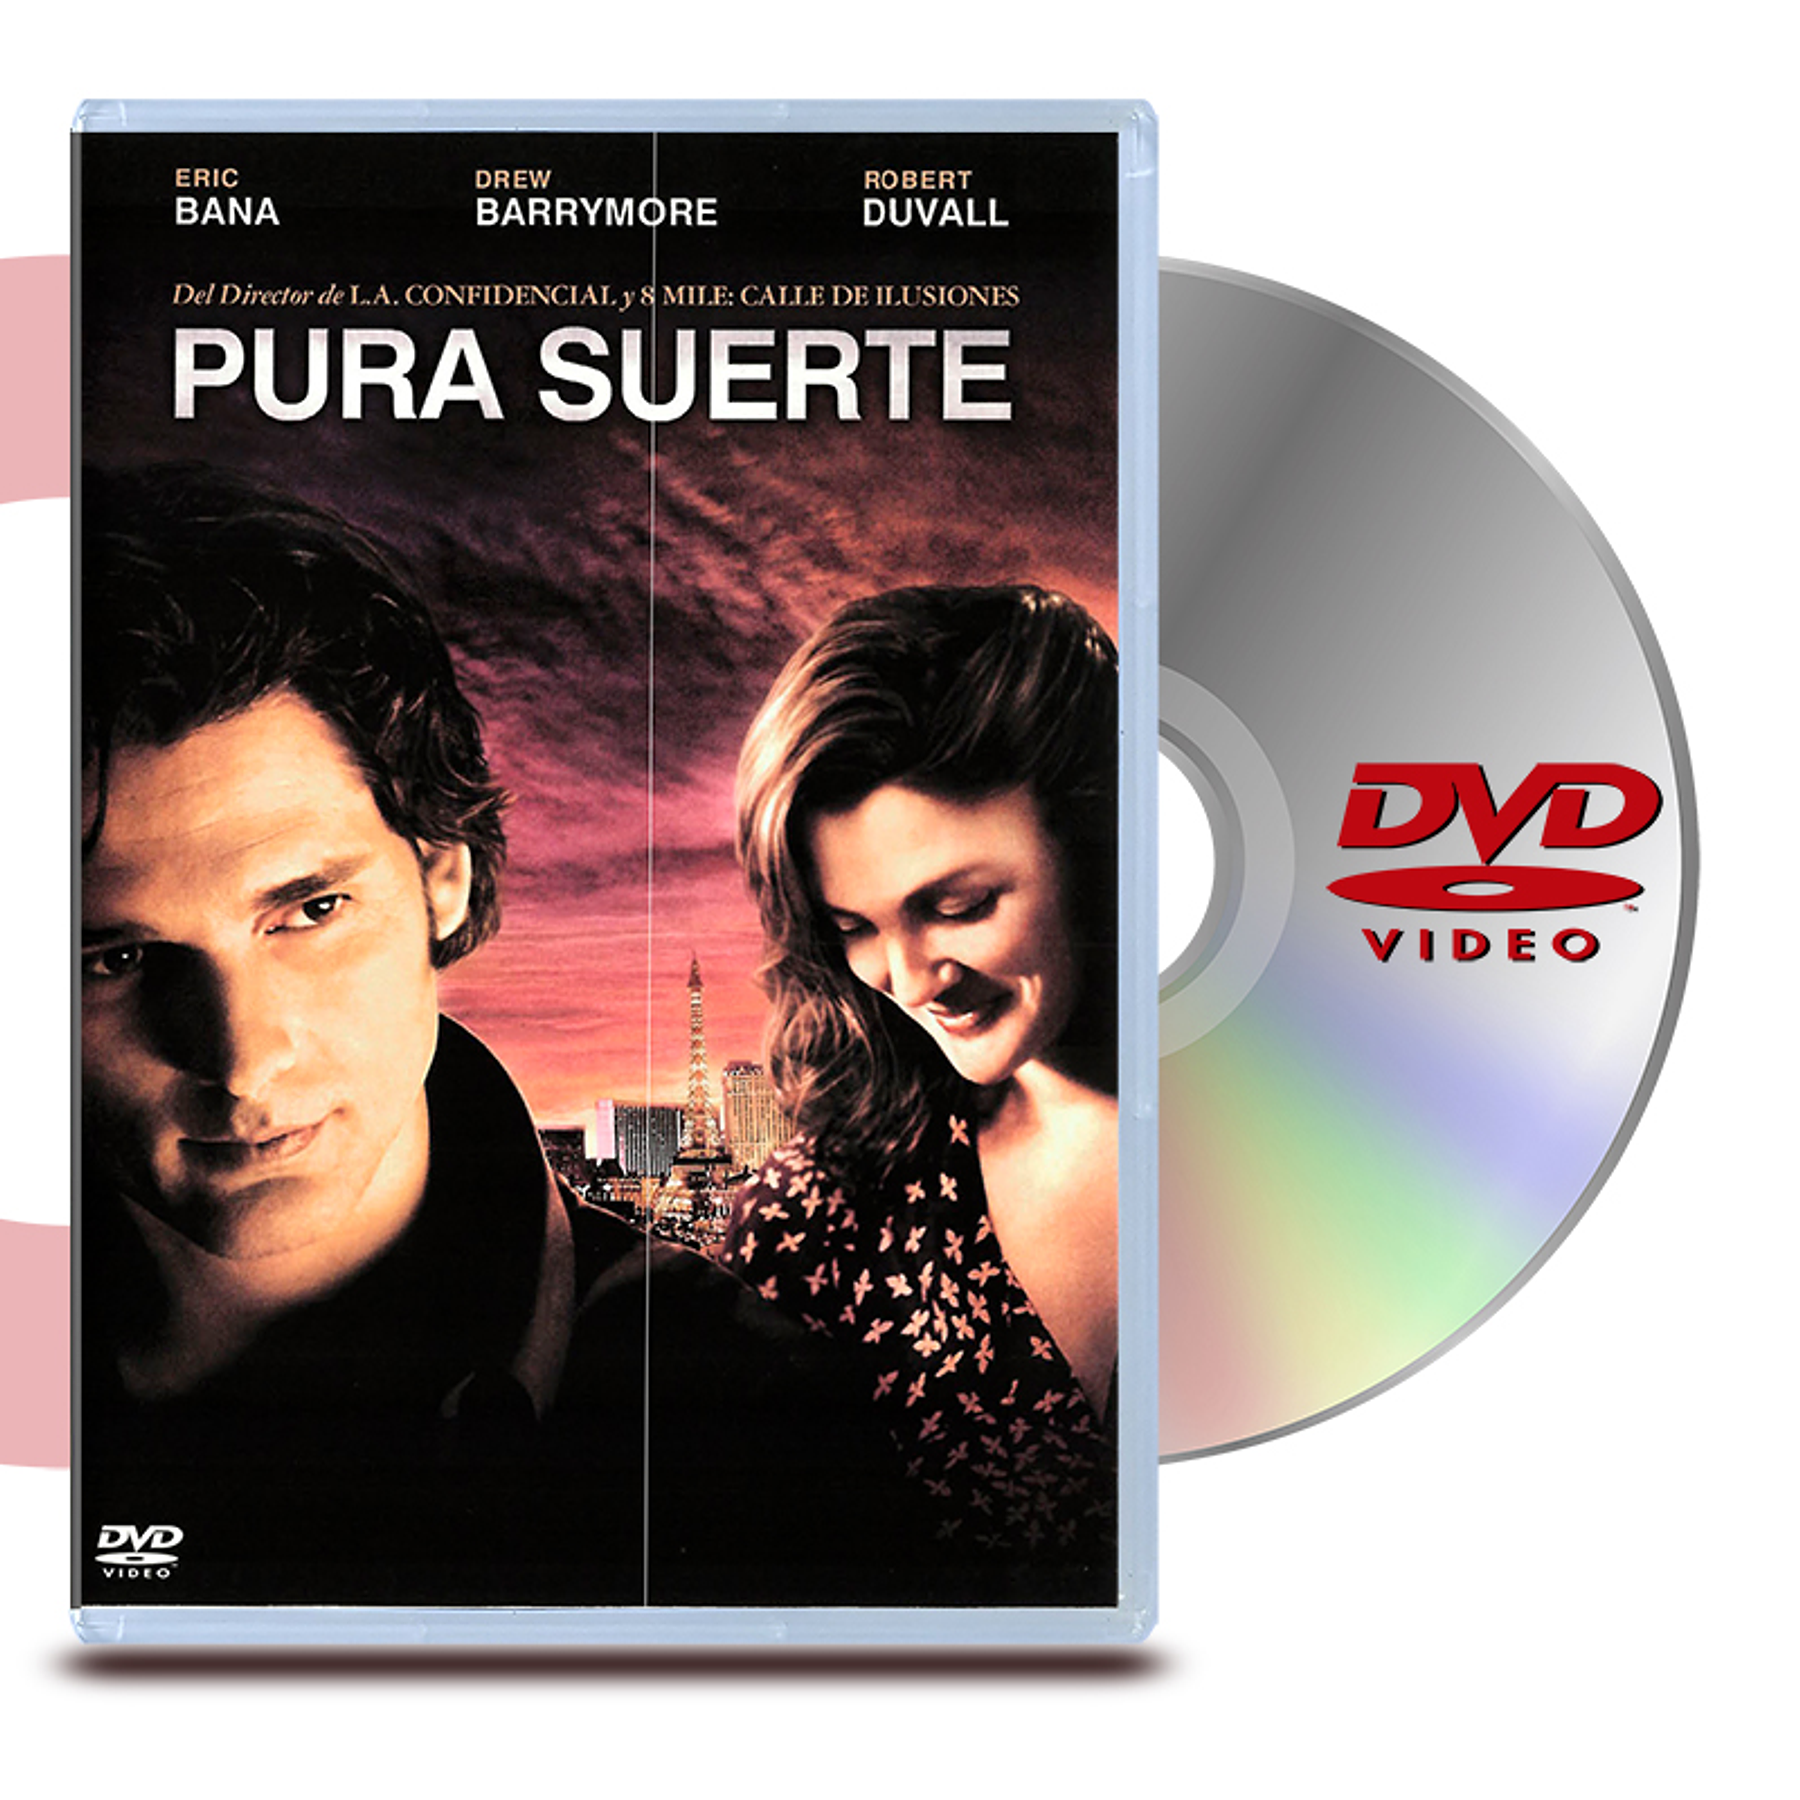 DVD PURA SUERTE